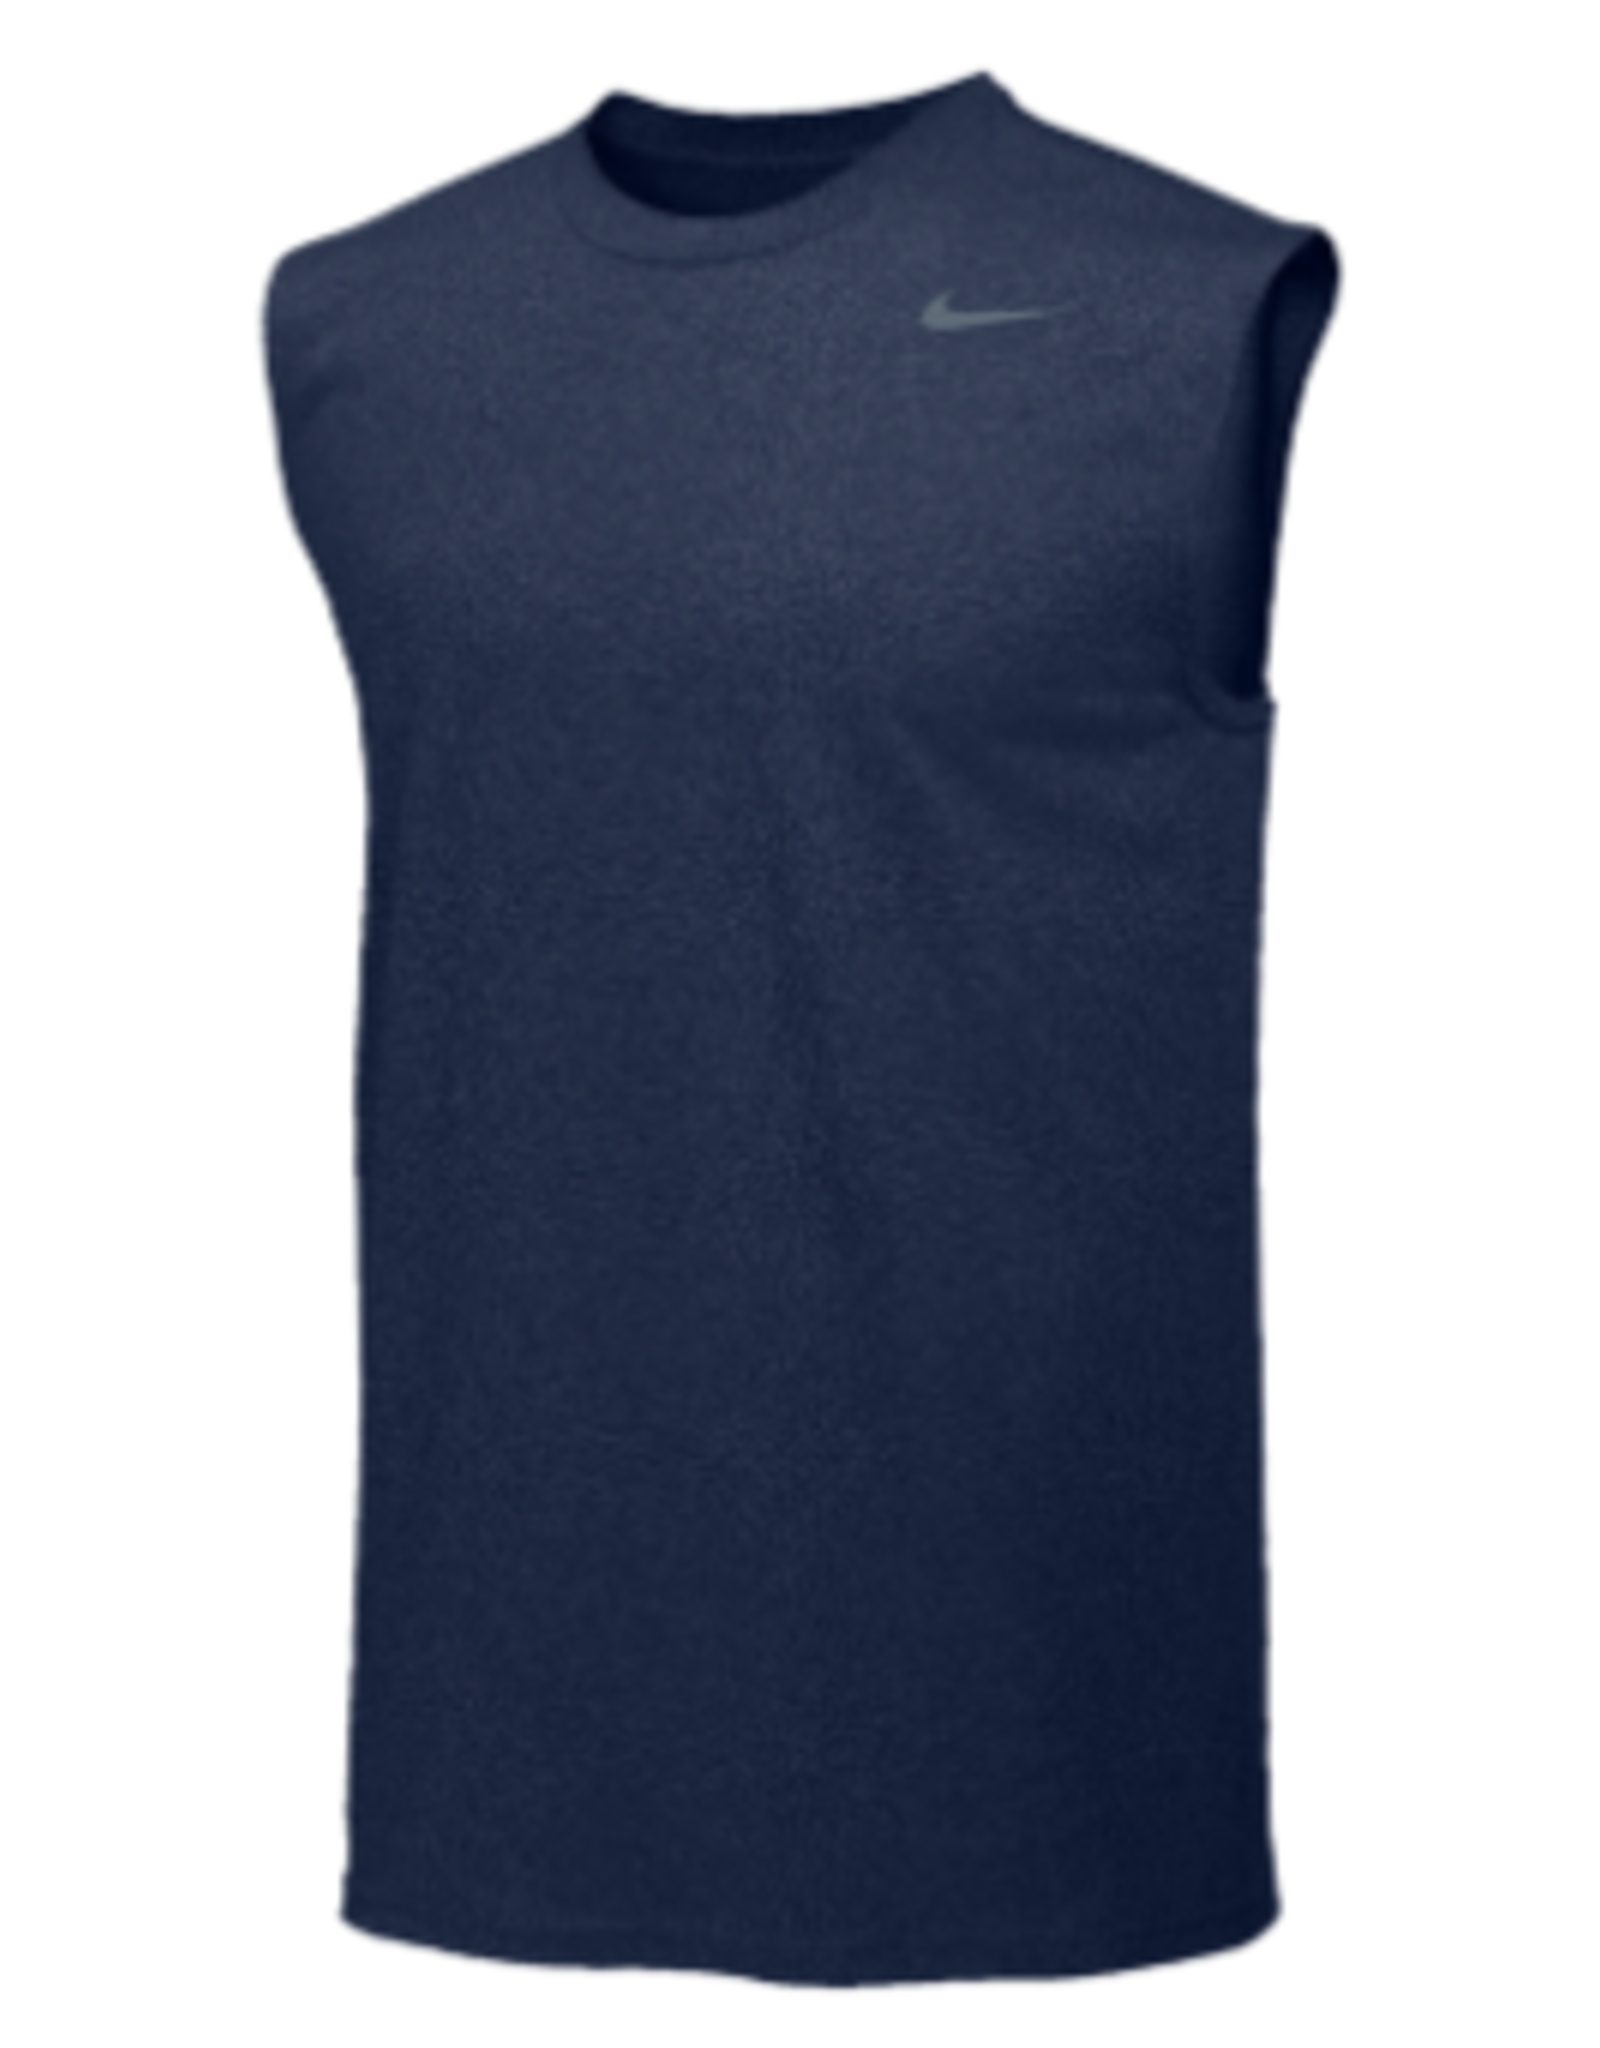 NON-UNIFORM JD Nike Custom Dry Fit muscle shirt